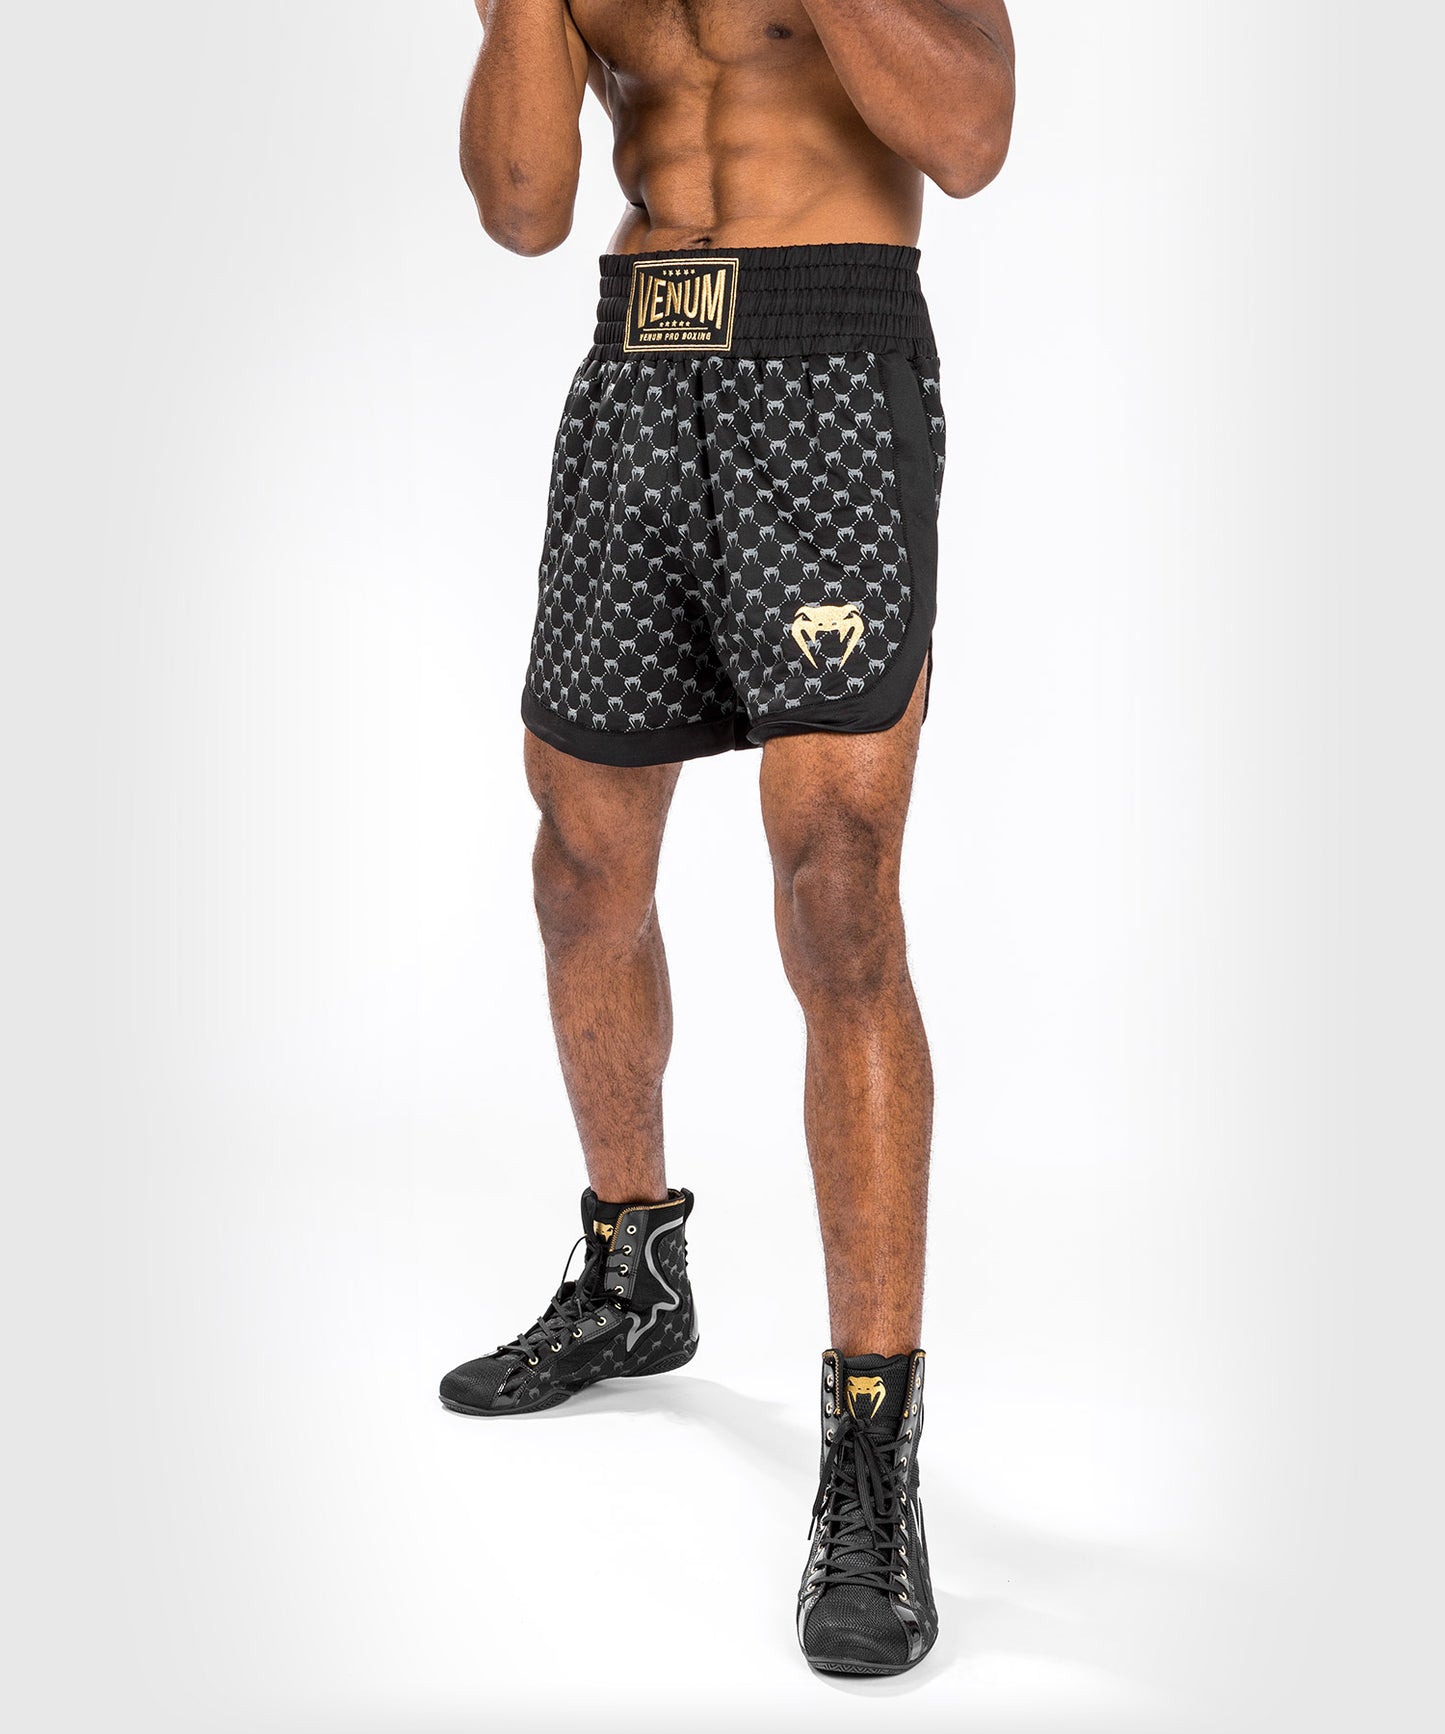  Venum Men's Standard Monogram Boxing Short, Black : Clothing,  Shoes & Jewelry